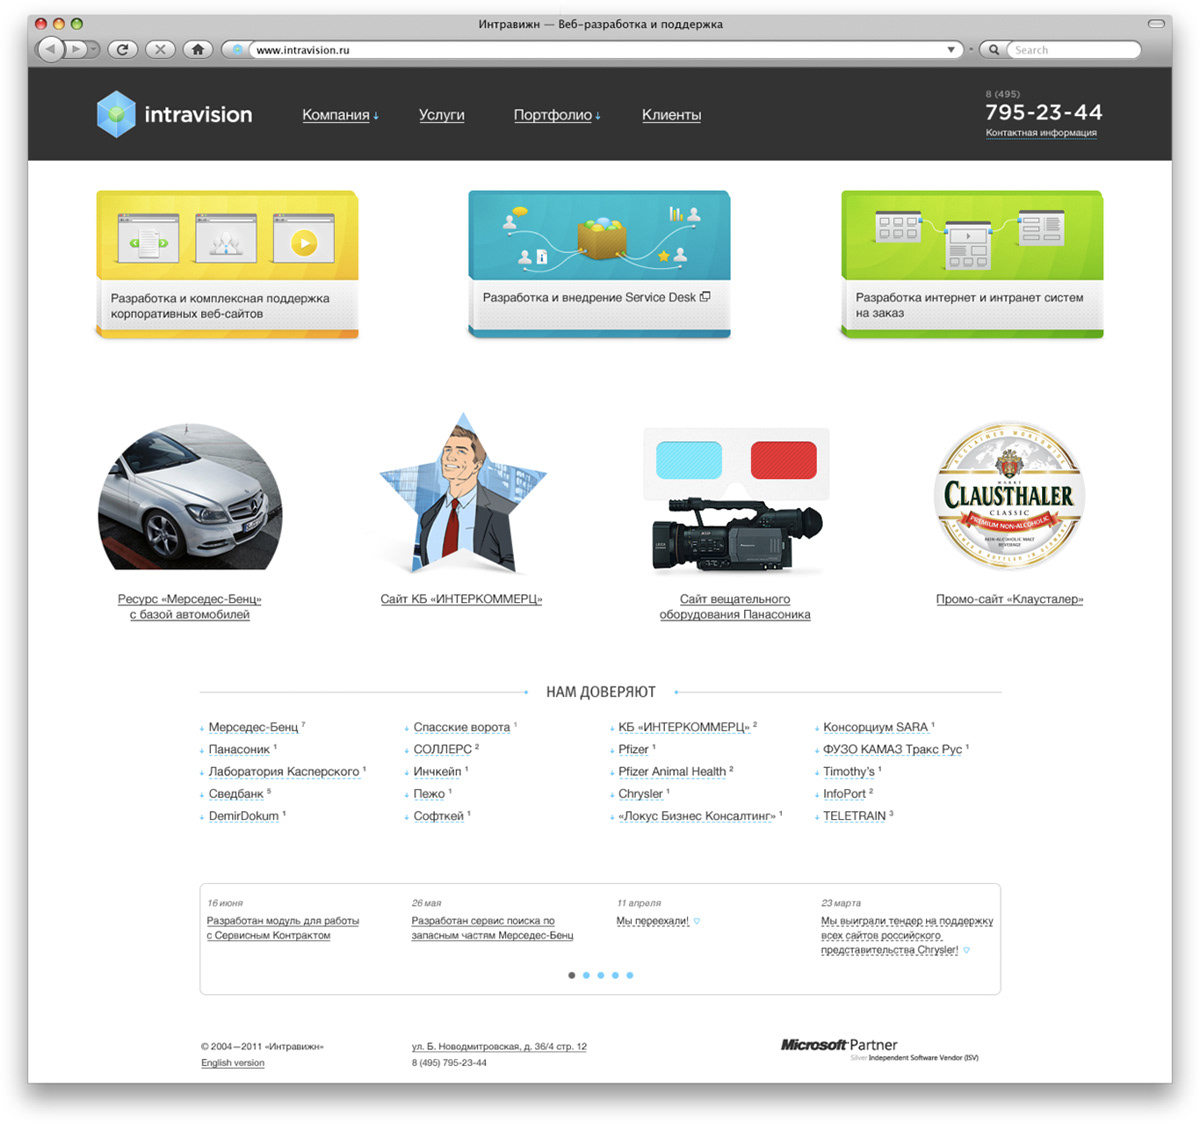 intravision Website redesign software development company